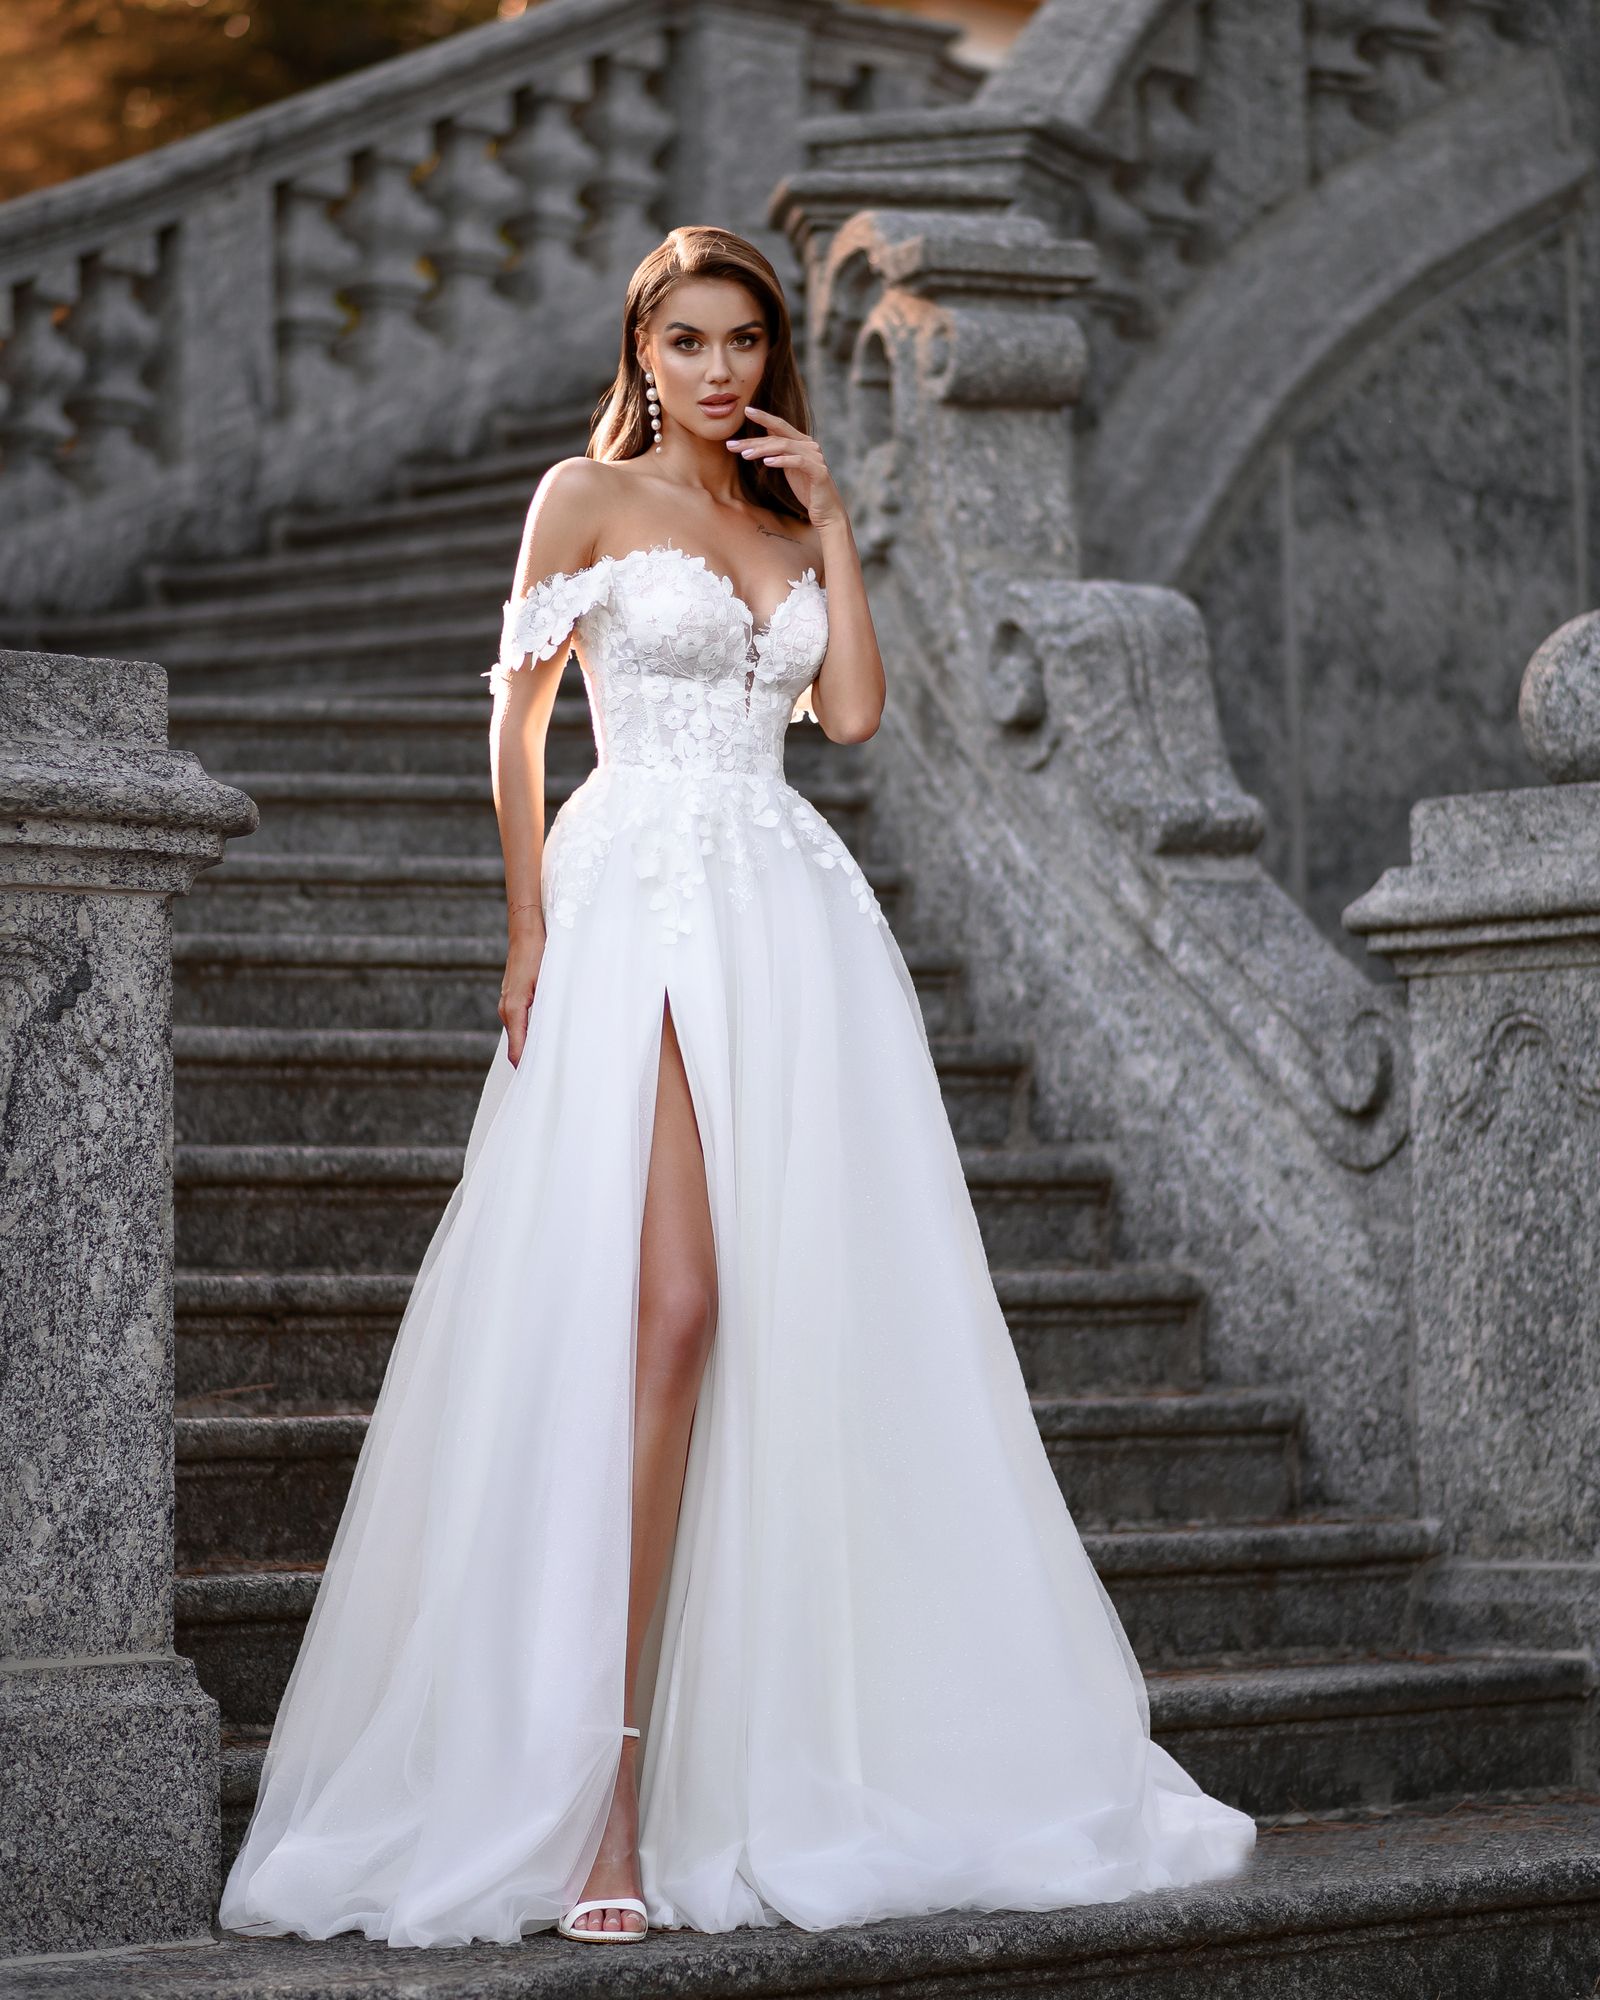 Corset Wedding Dress, Bridal Gown, Wedding Dress 2021, Stylish